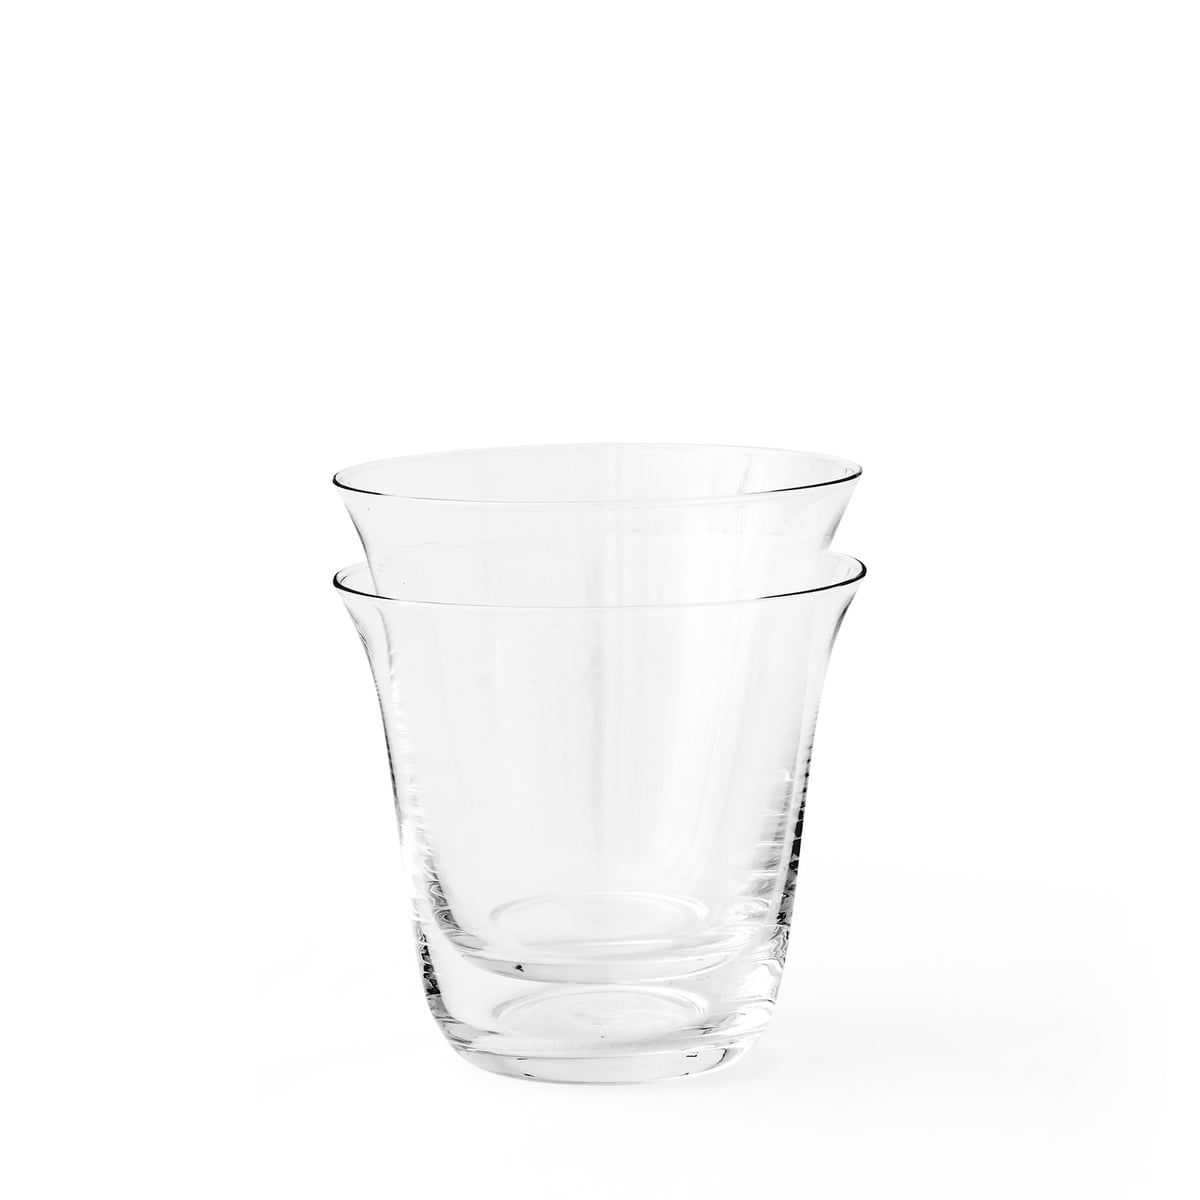 ART & ARTIFACT Glass Pipe Cool Drinking Glasses